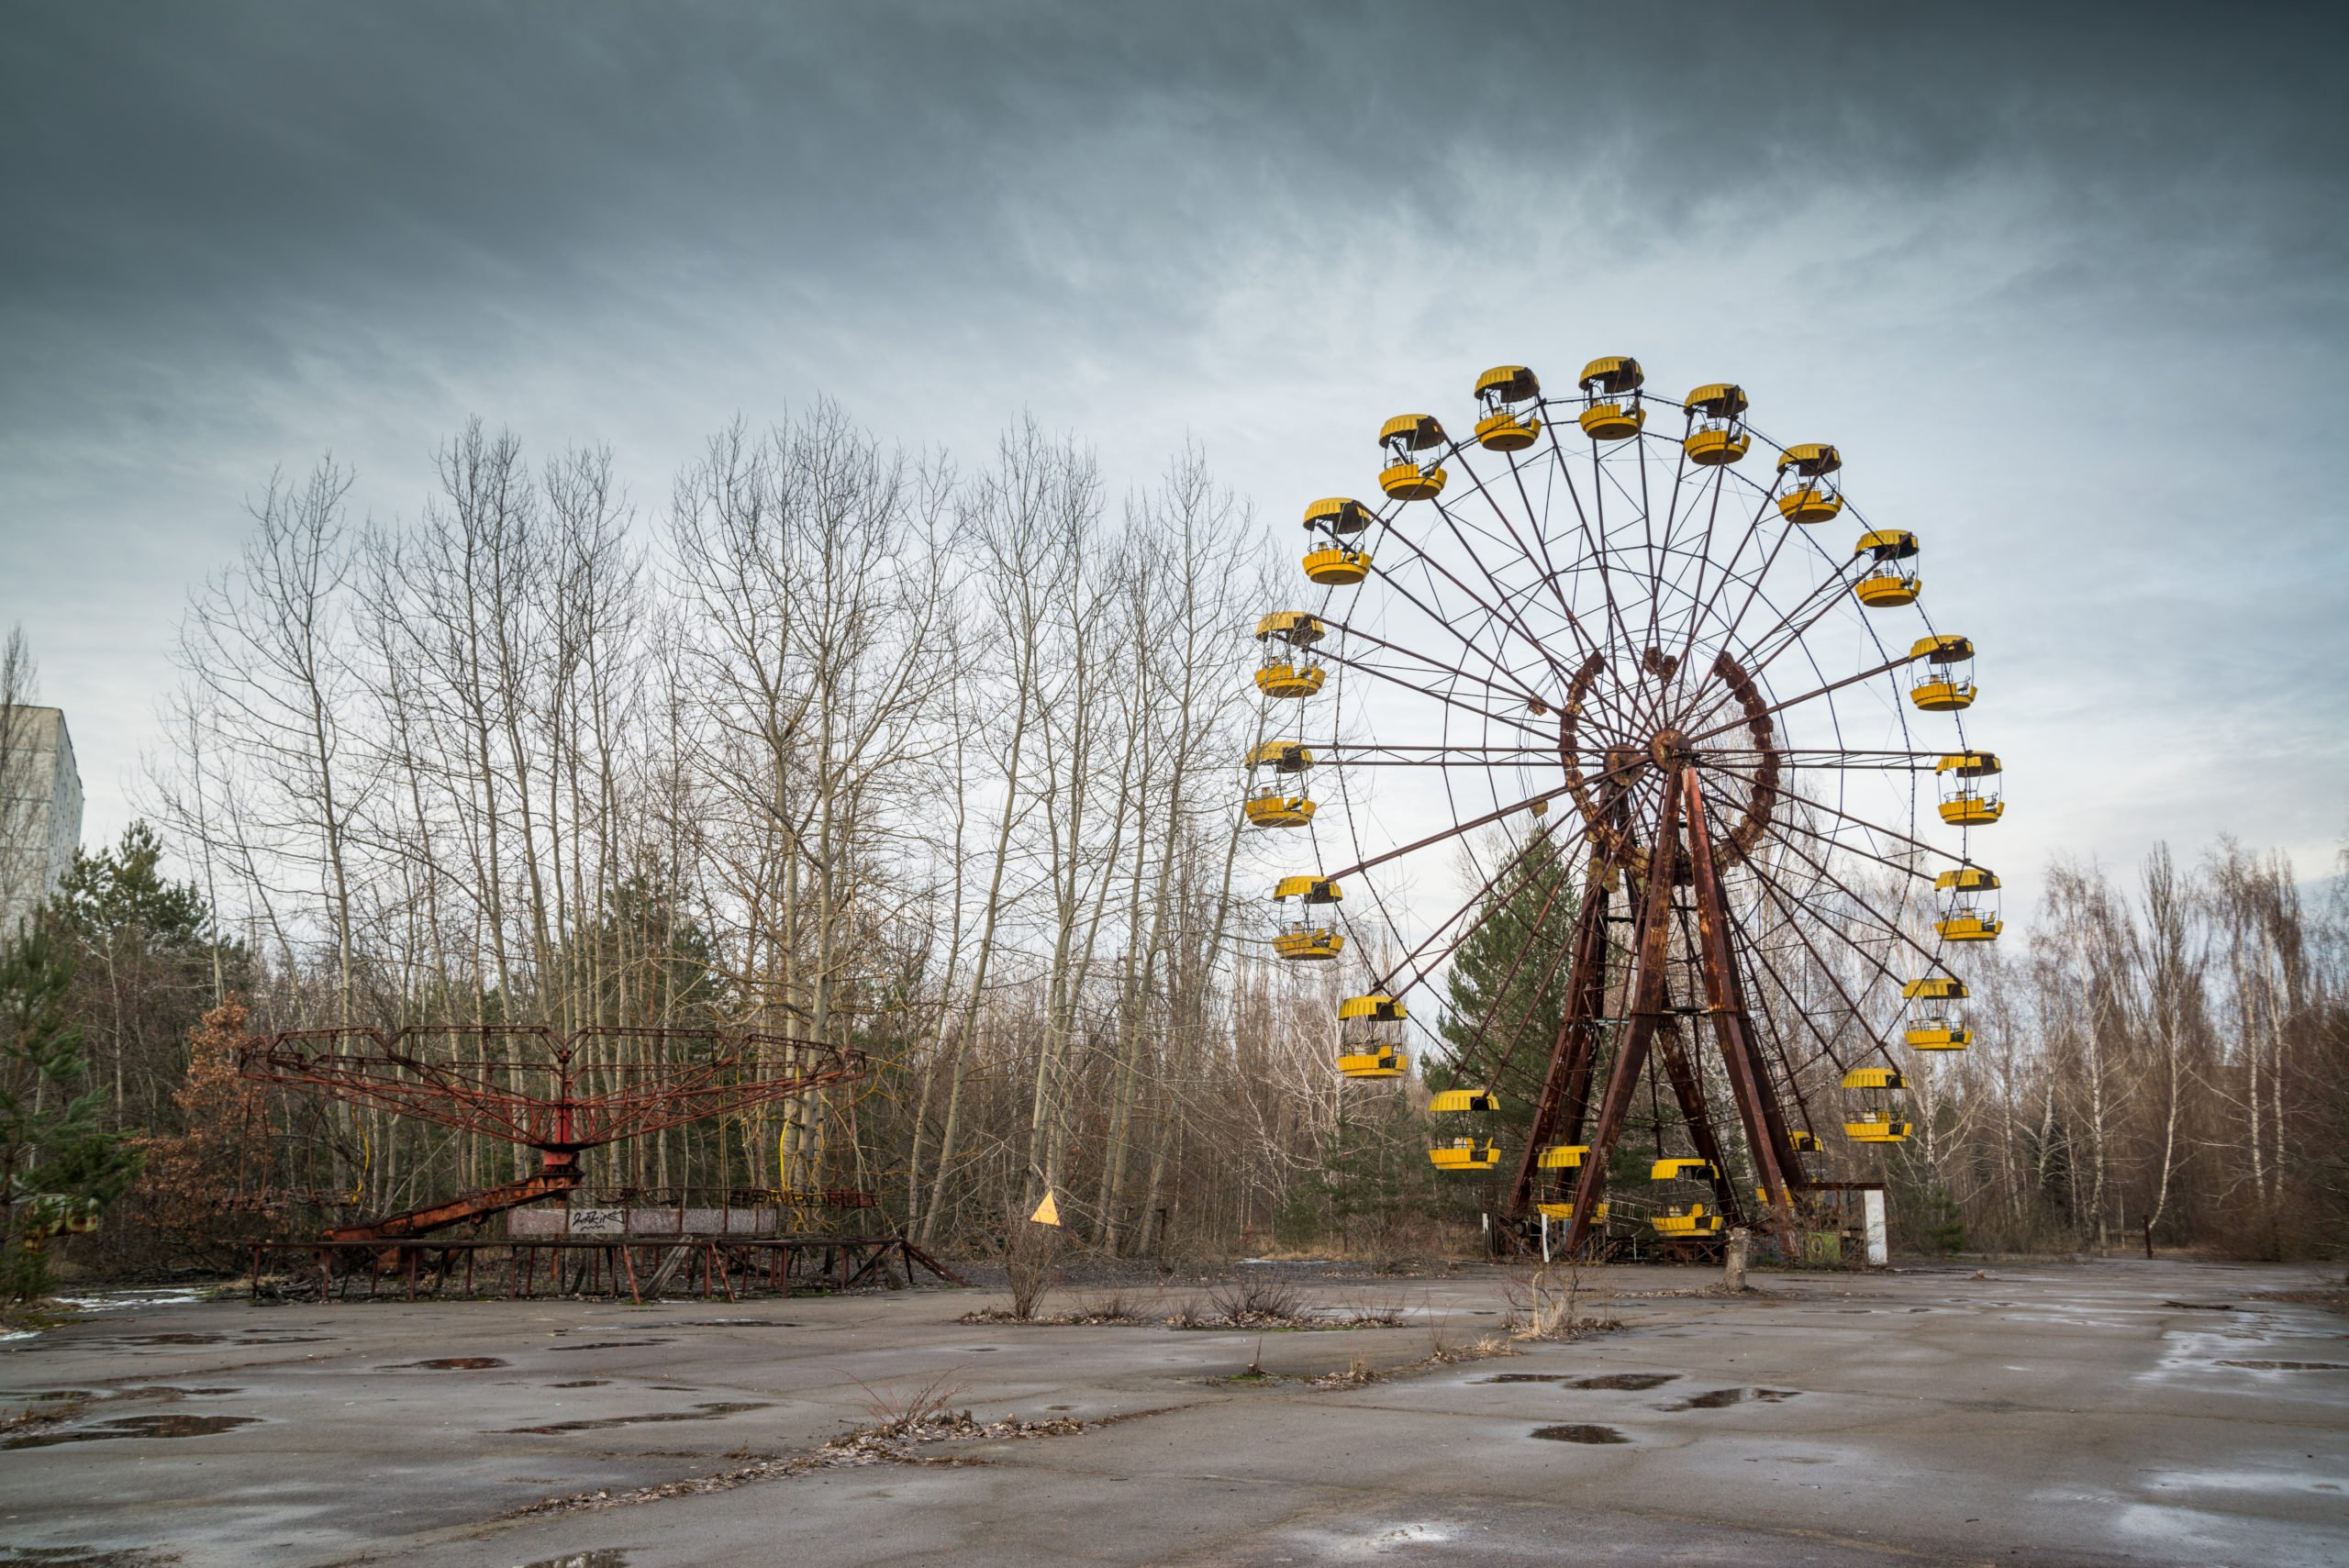 Chernobyl in Ukraine. 